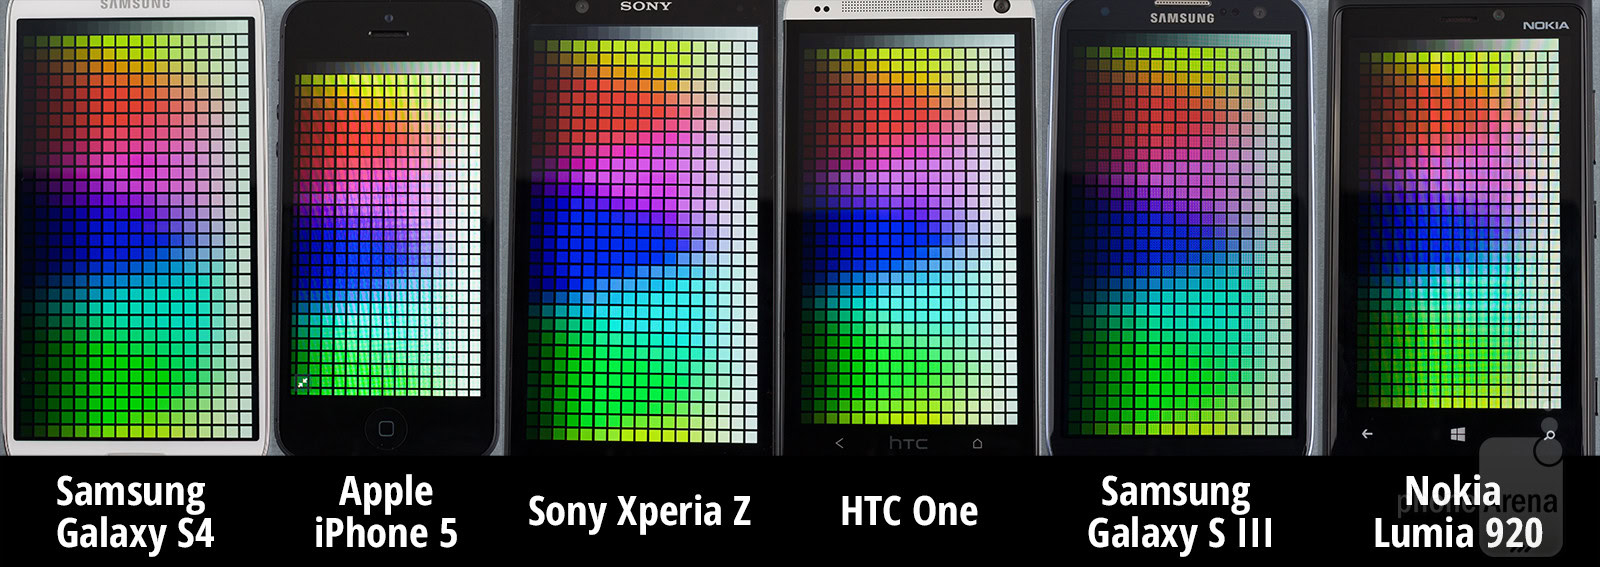 Galaxy S4 display comparison